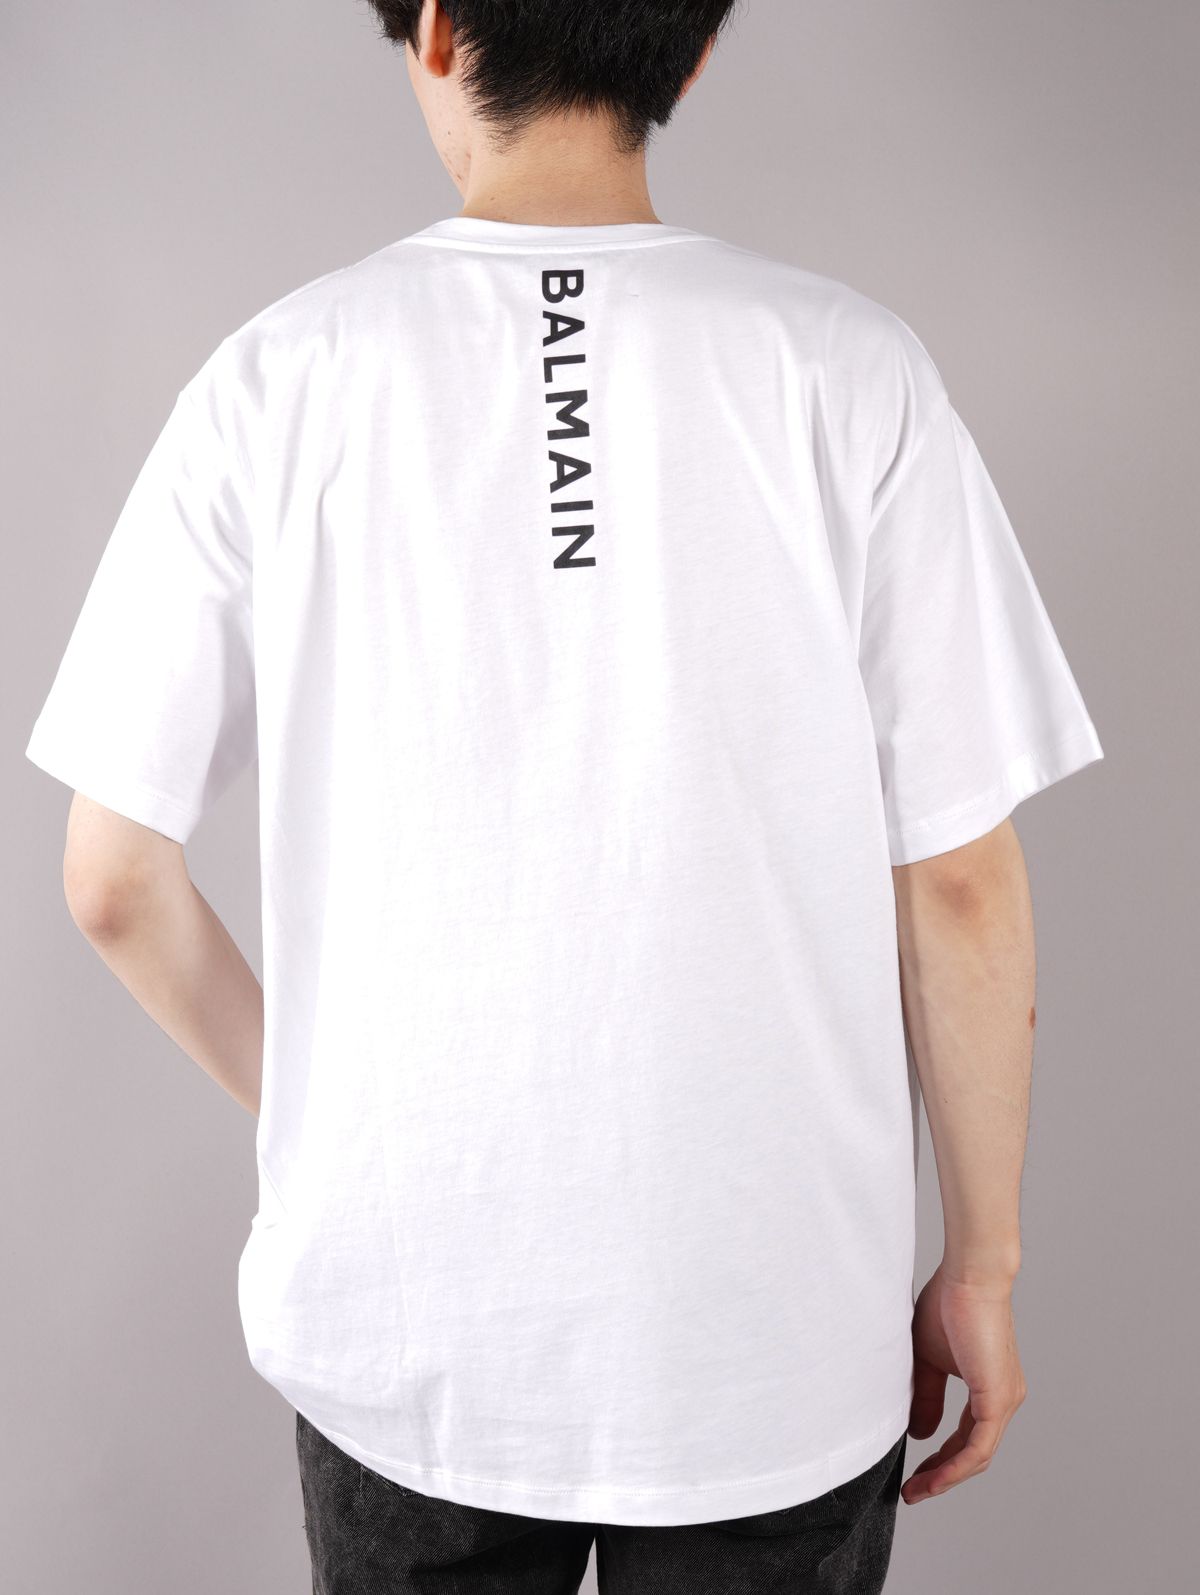 BALMAIN - 【ラスト1点】BALMAIN BUCK T-SHIRT / バックロゴ T